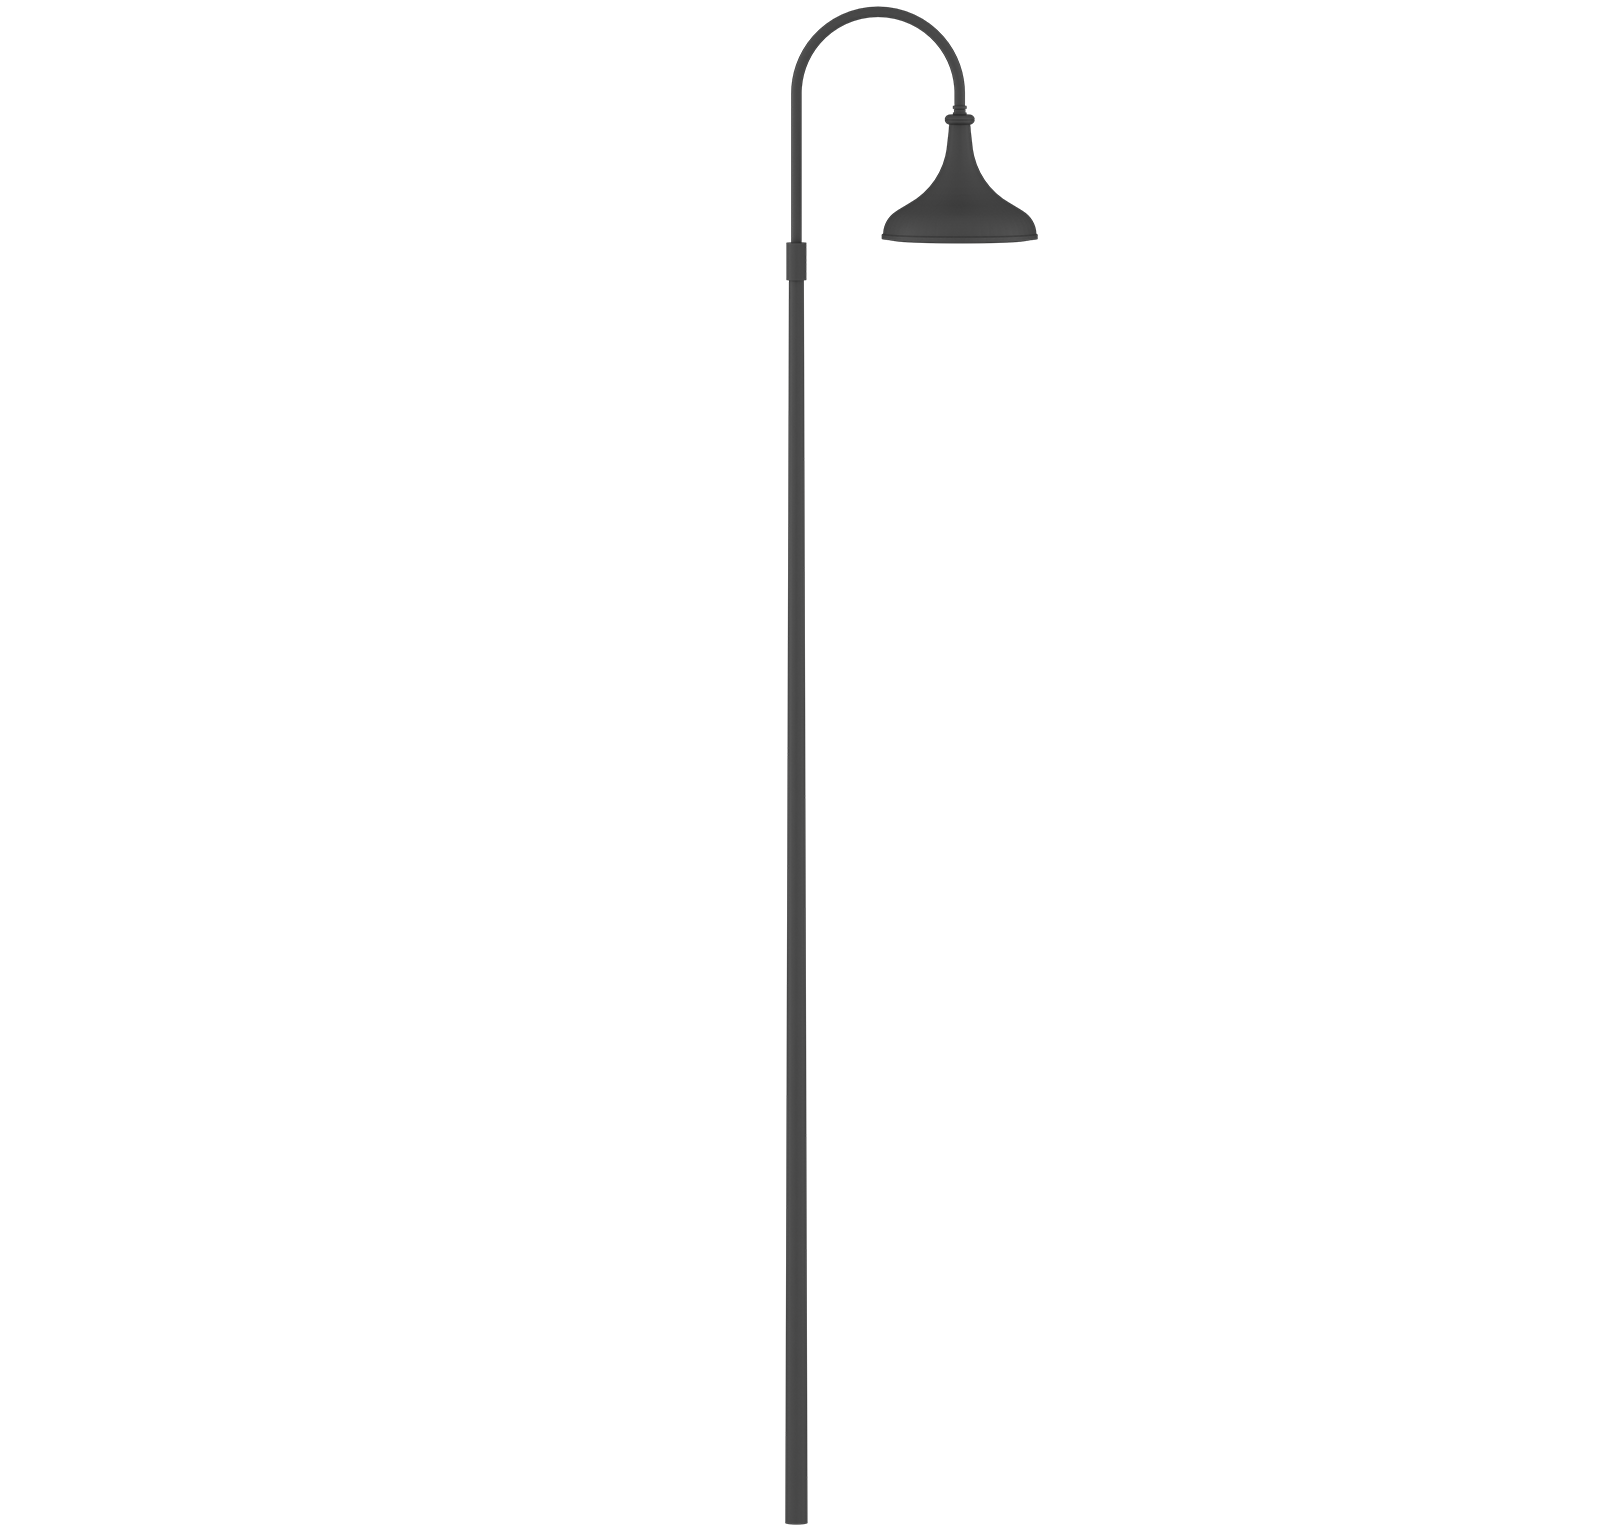 PG street conical lighting pole- AEC Illuminazione